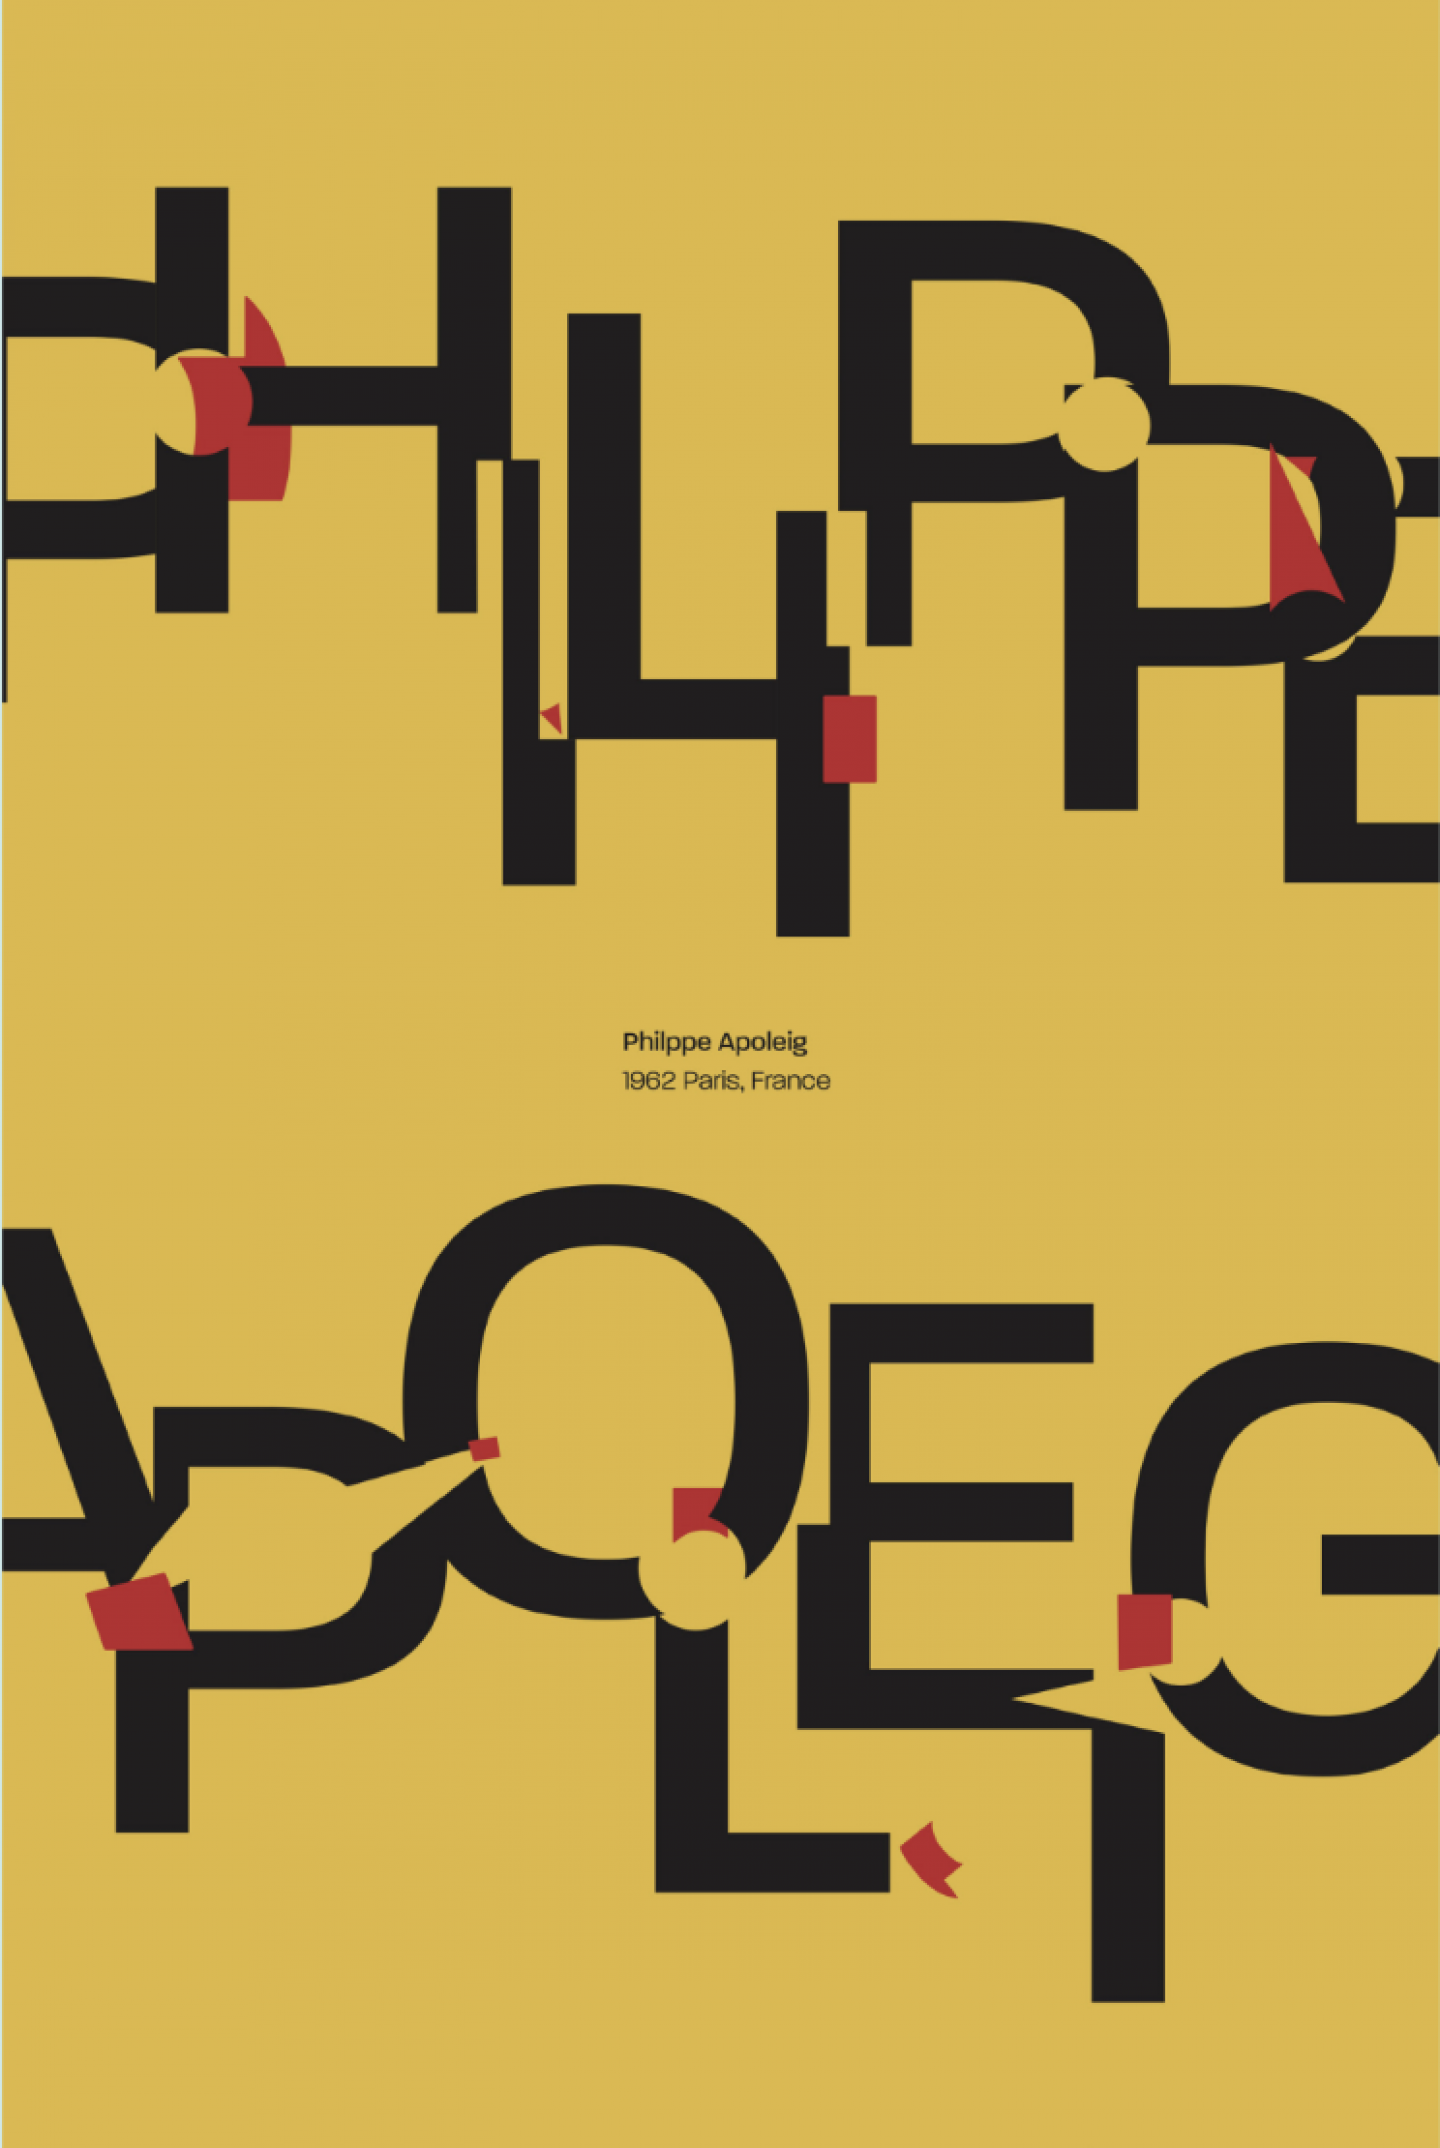 Philippe Apeloig Type Poster